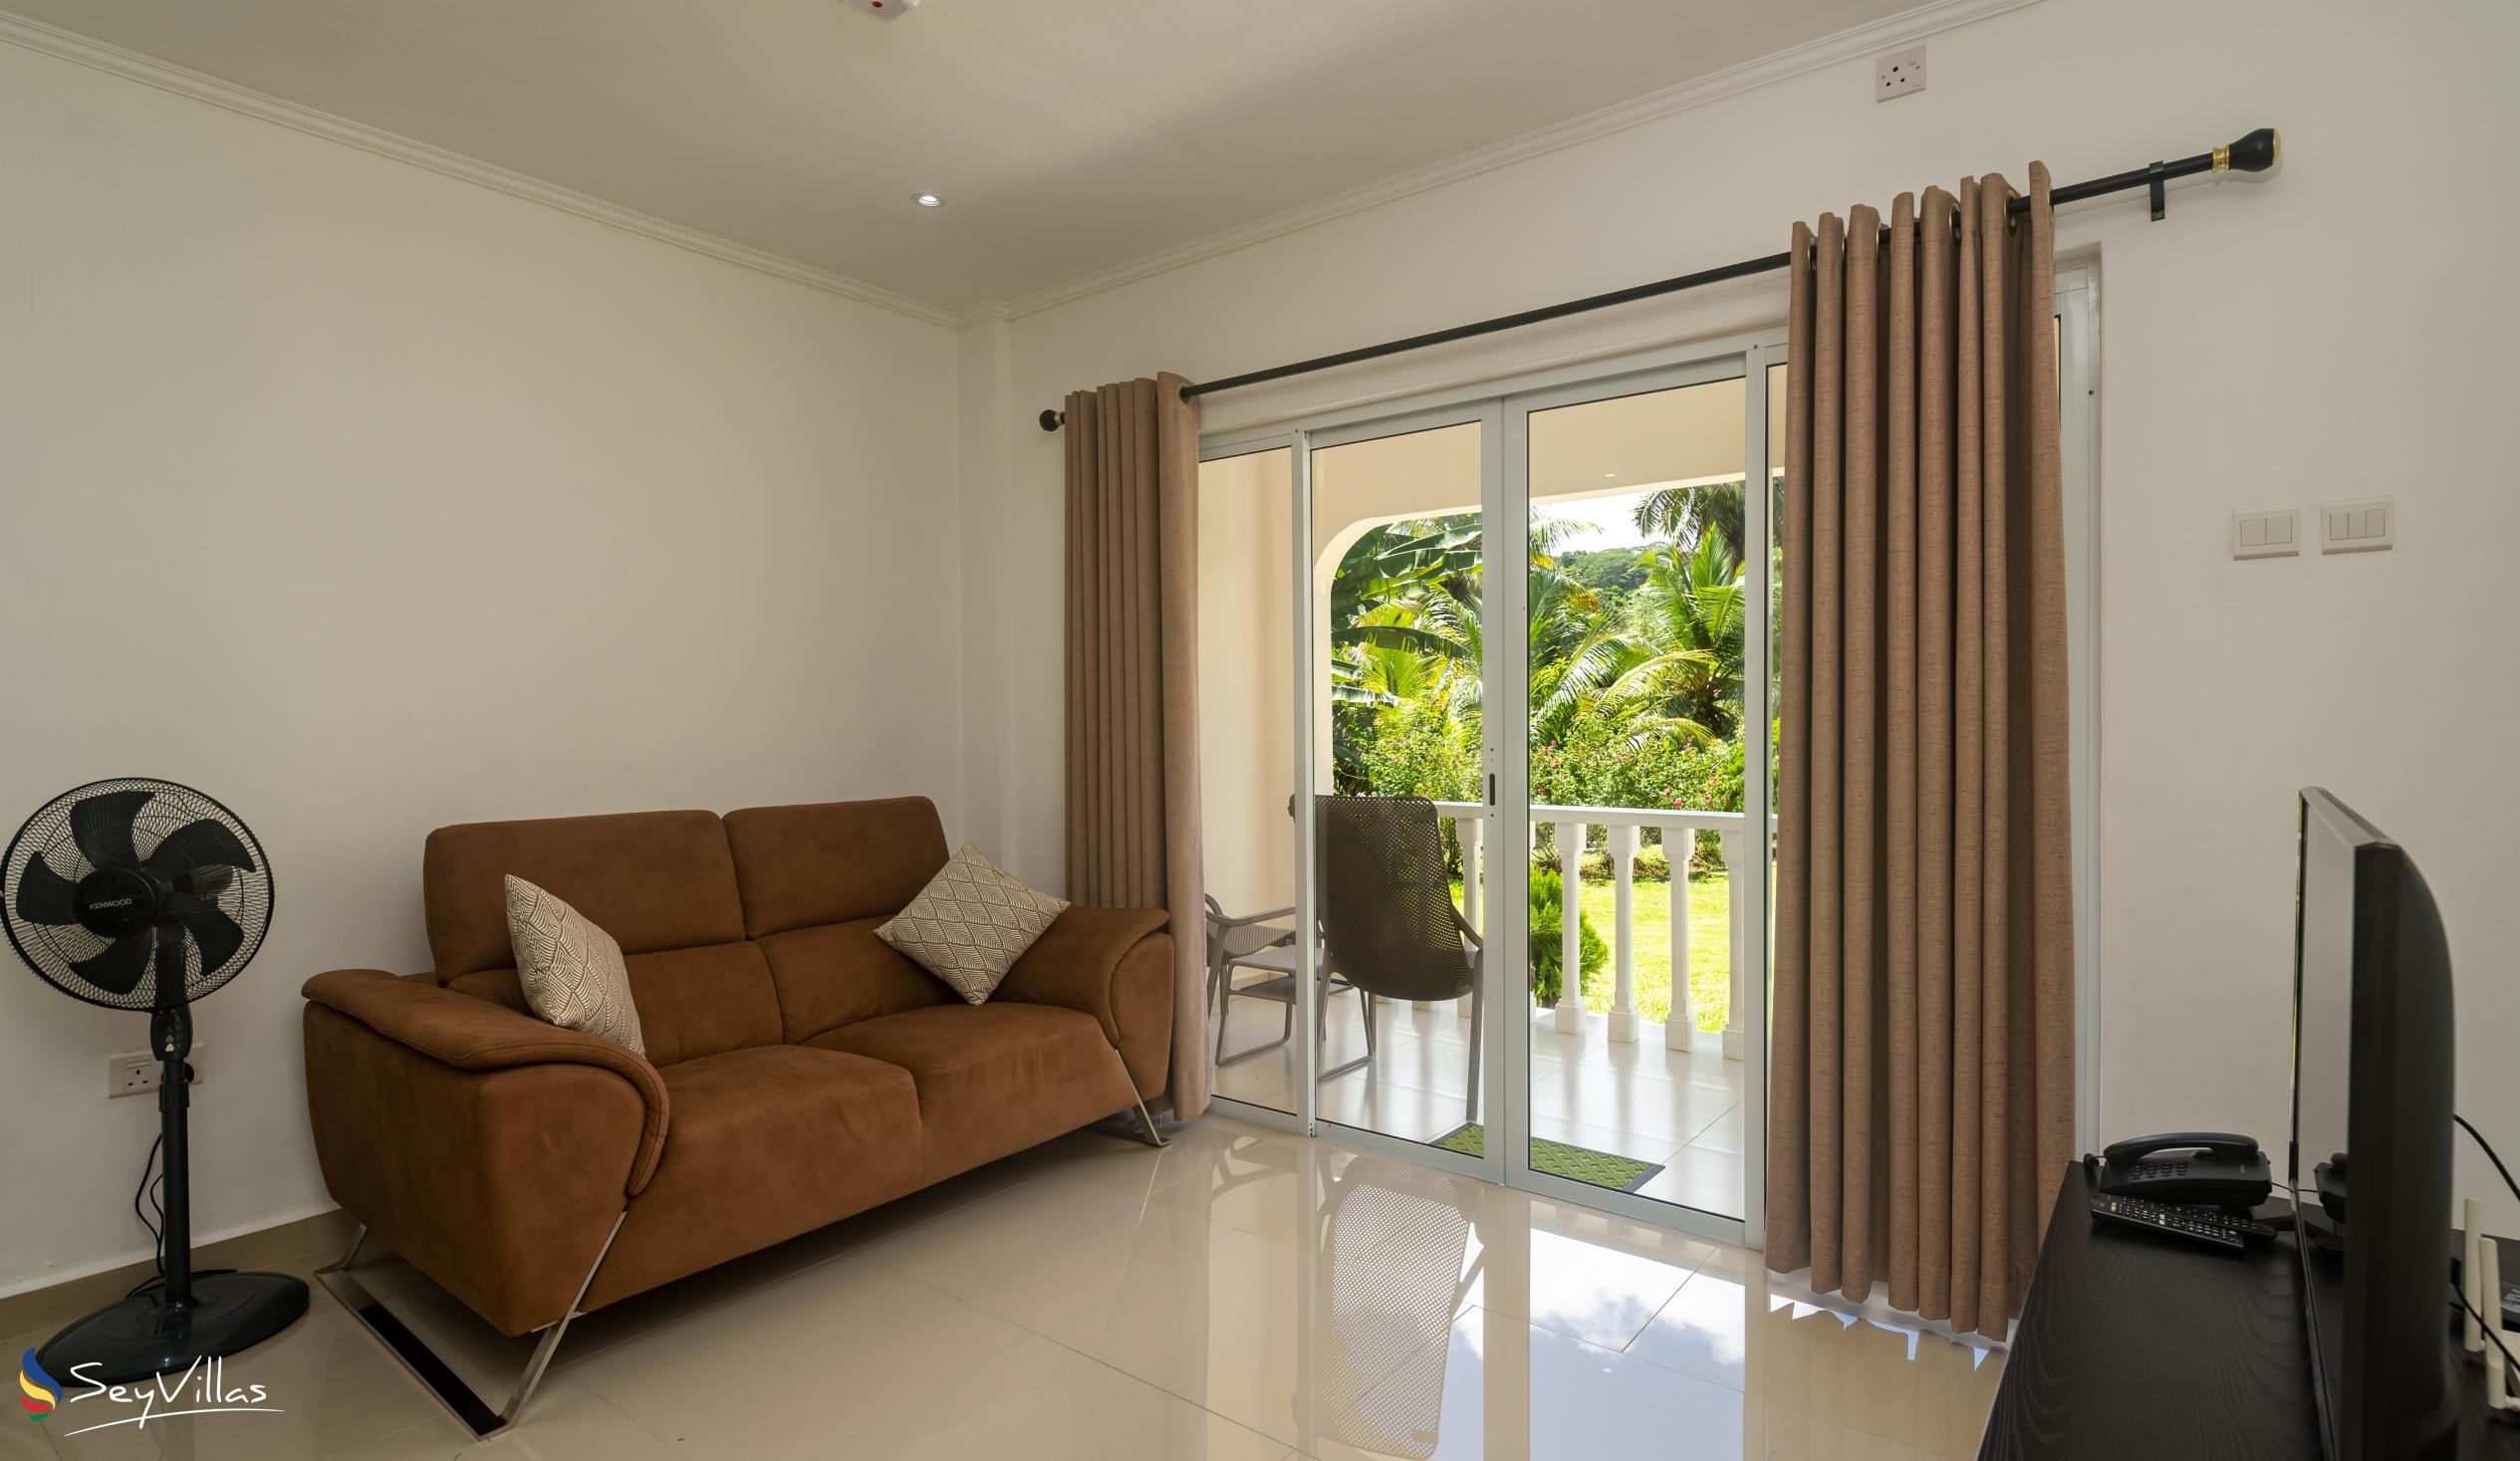 Foto 23: Paul's Residence - Appartamento con 1 camera - Mahé (Seychelles)